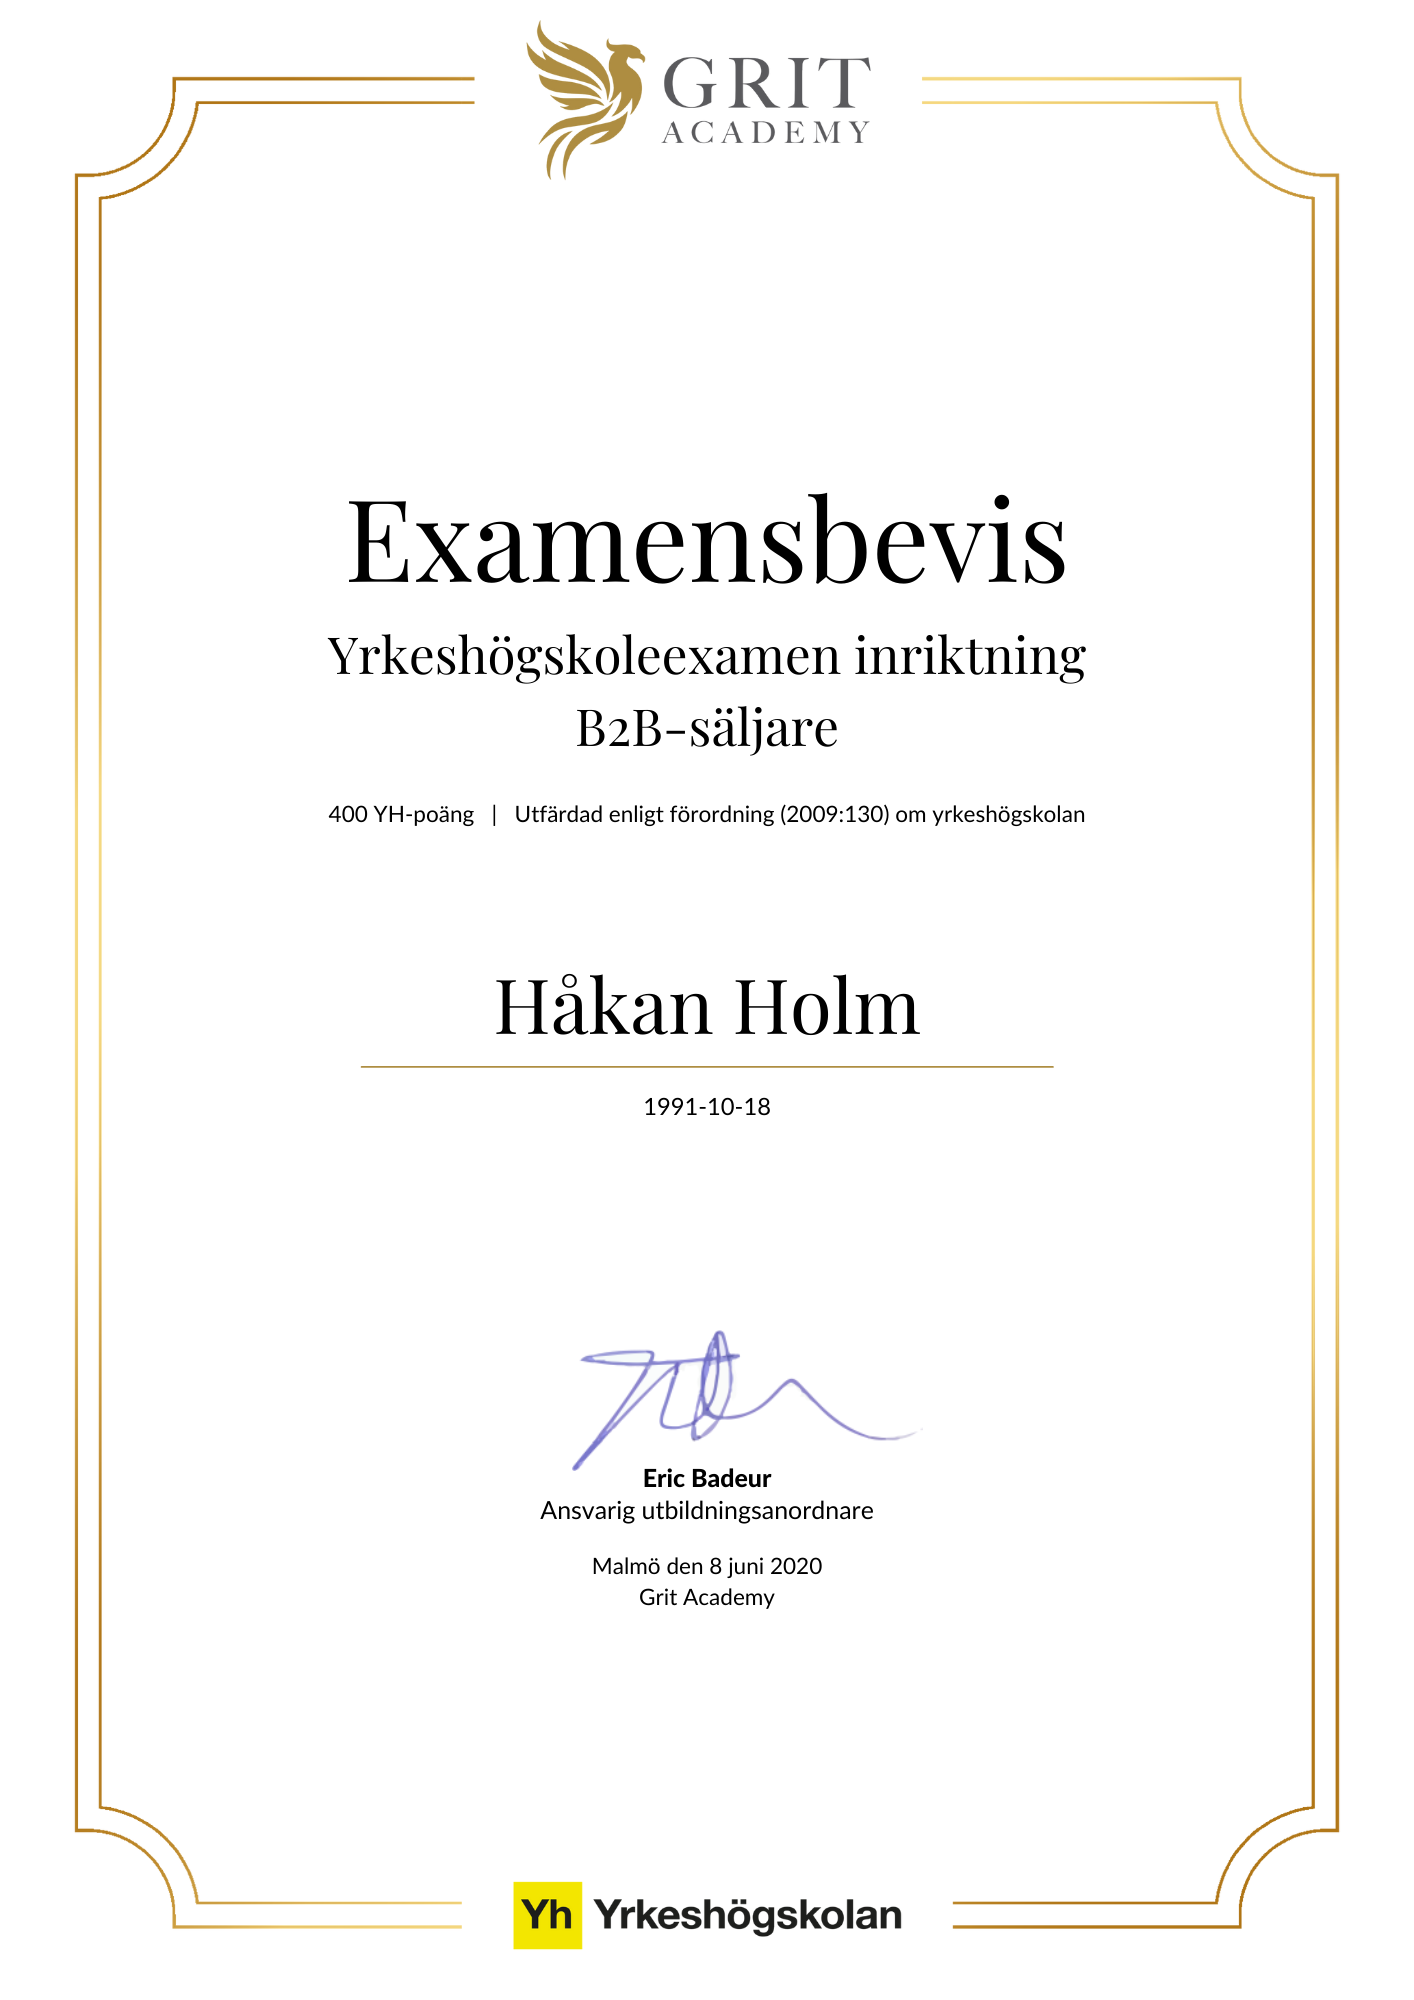 Examensbevis Håkan Holm - 1